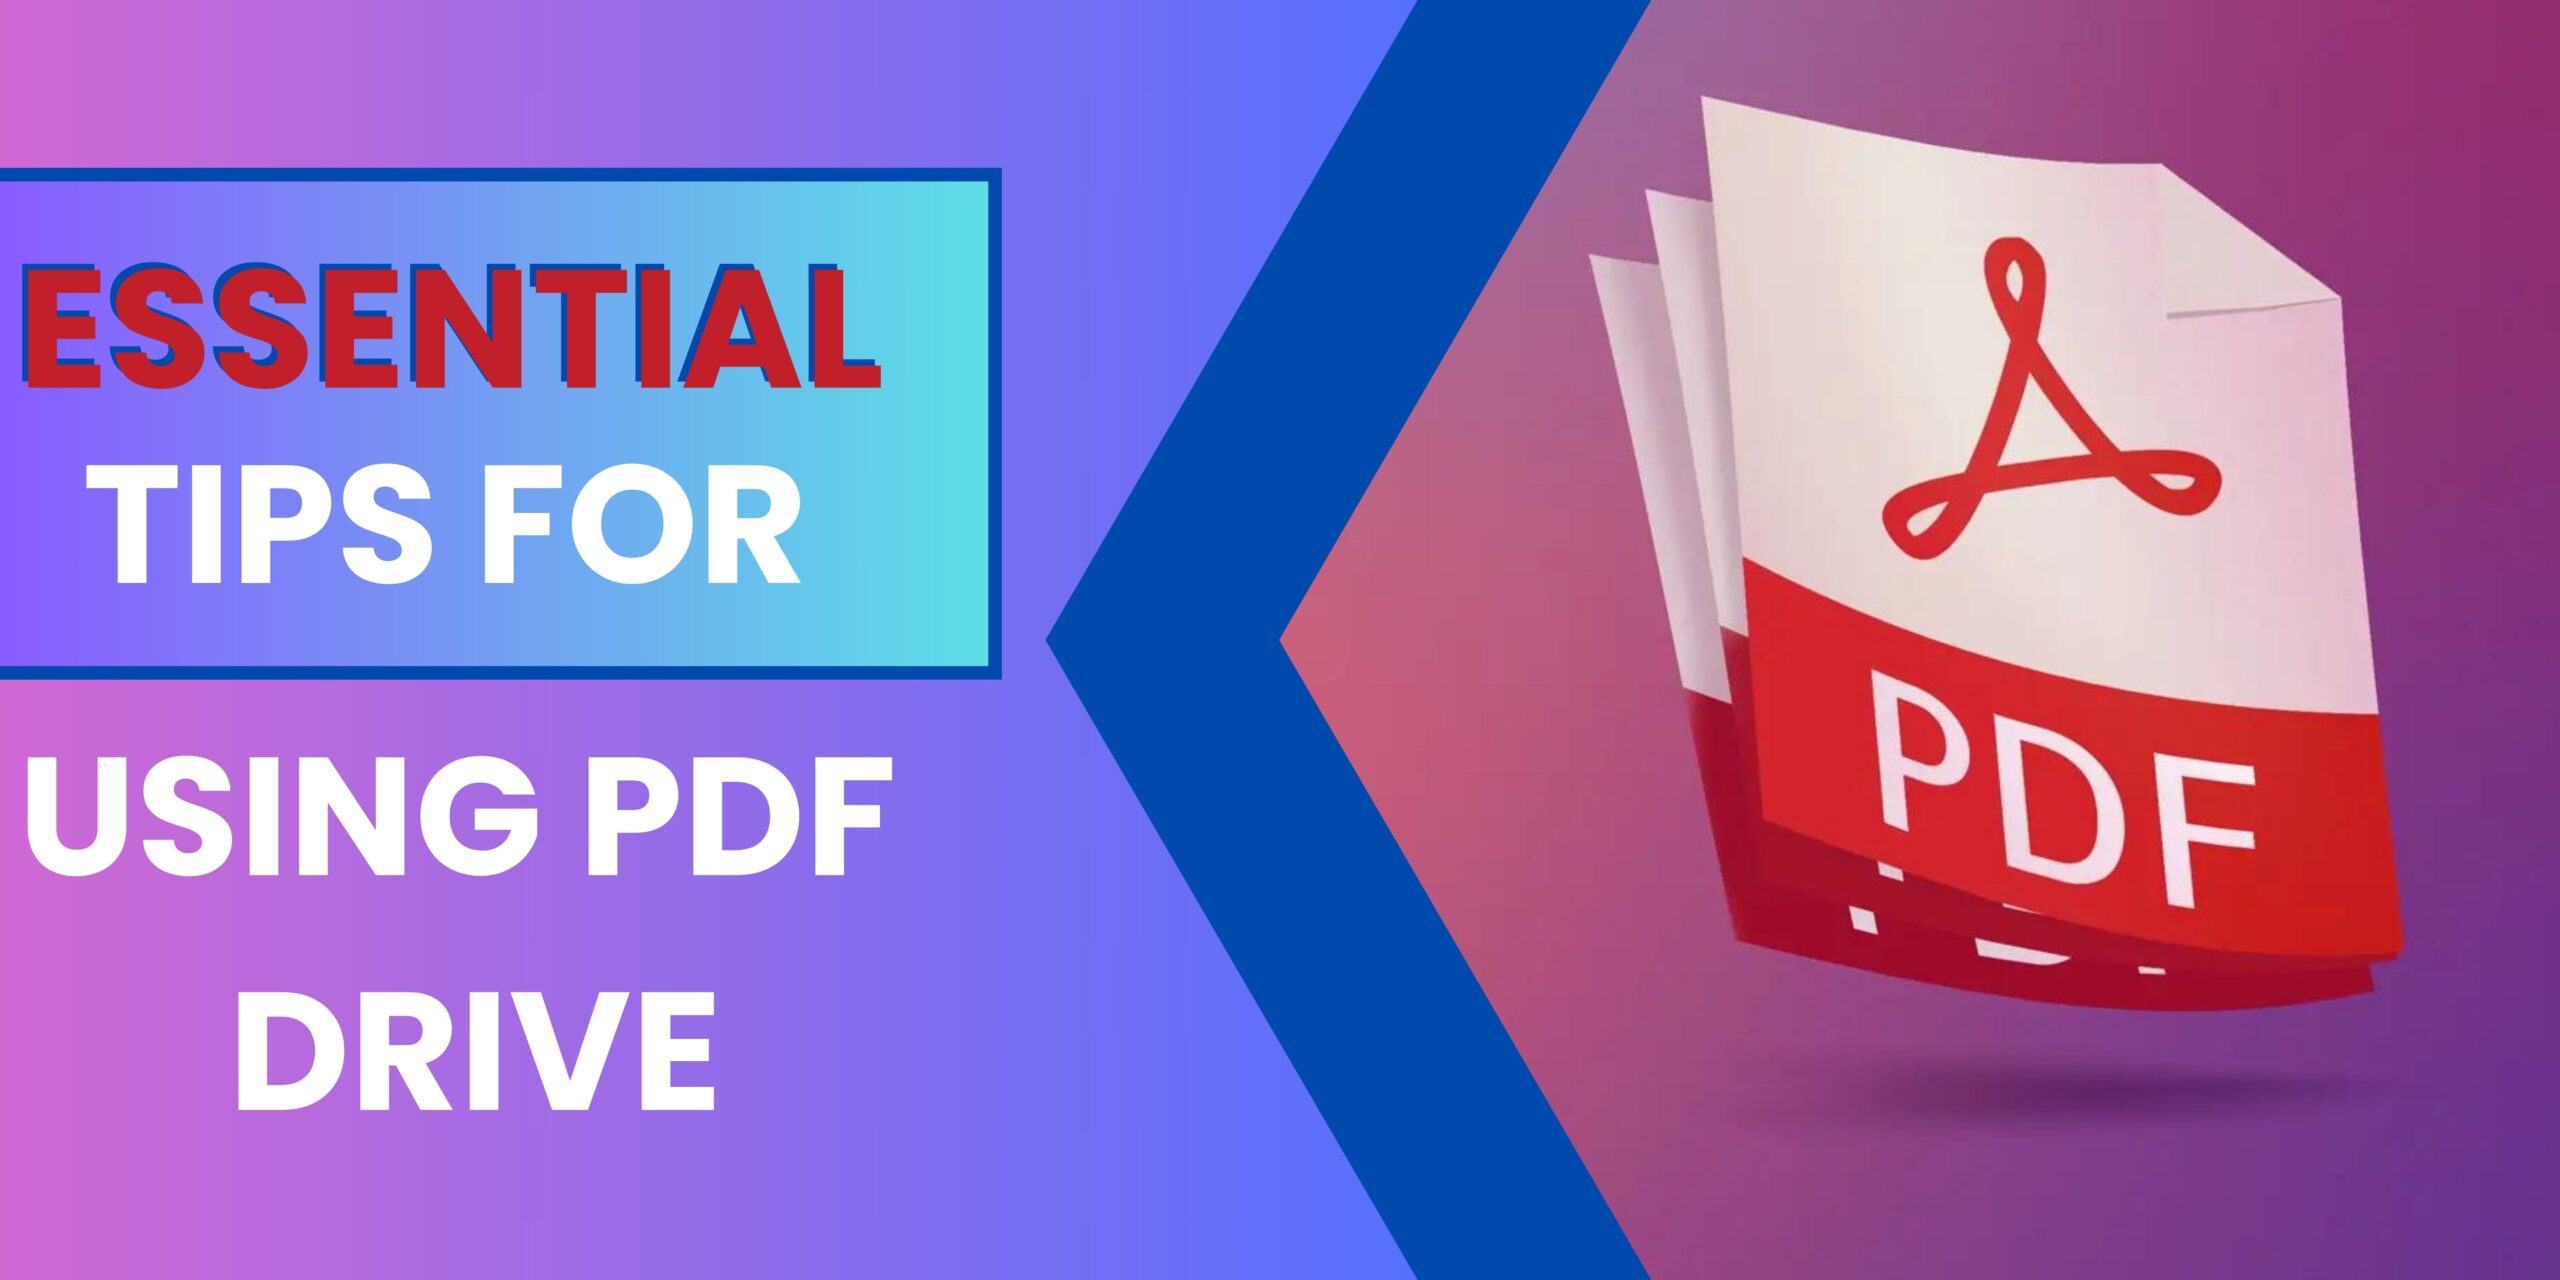 Advantages of Using PDF Drive